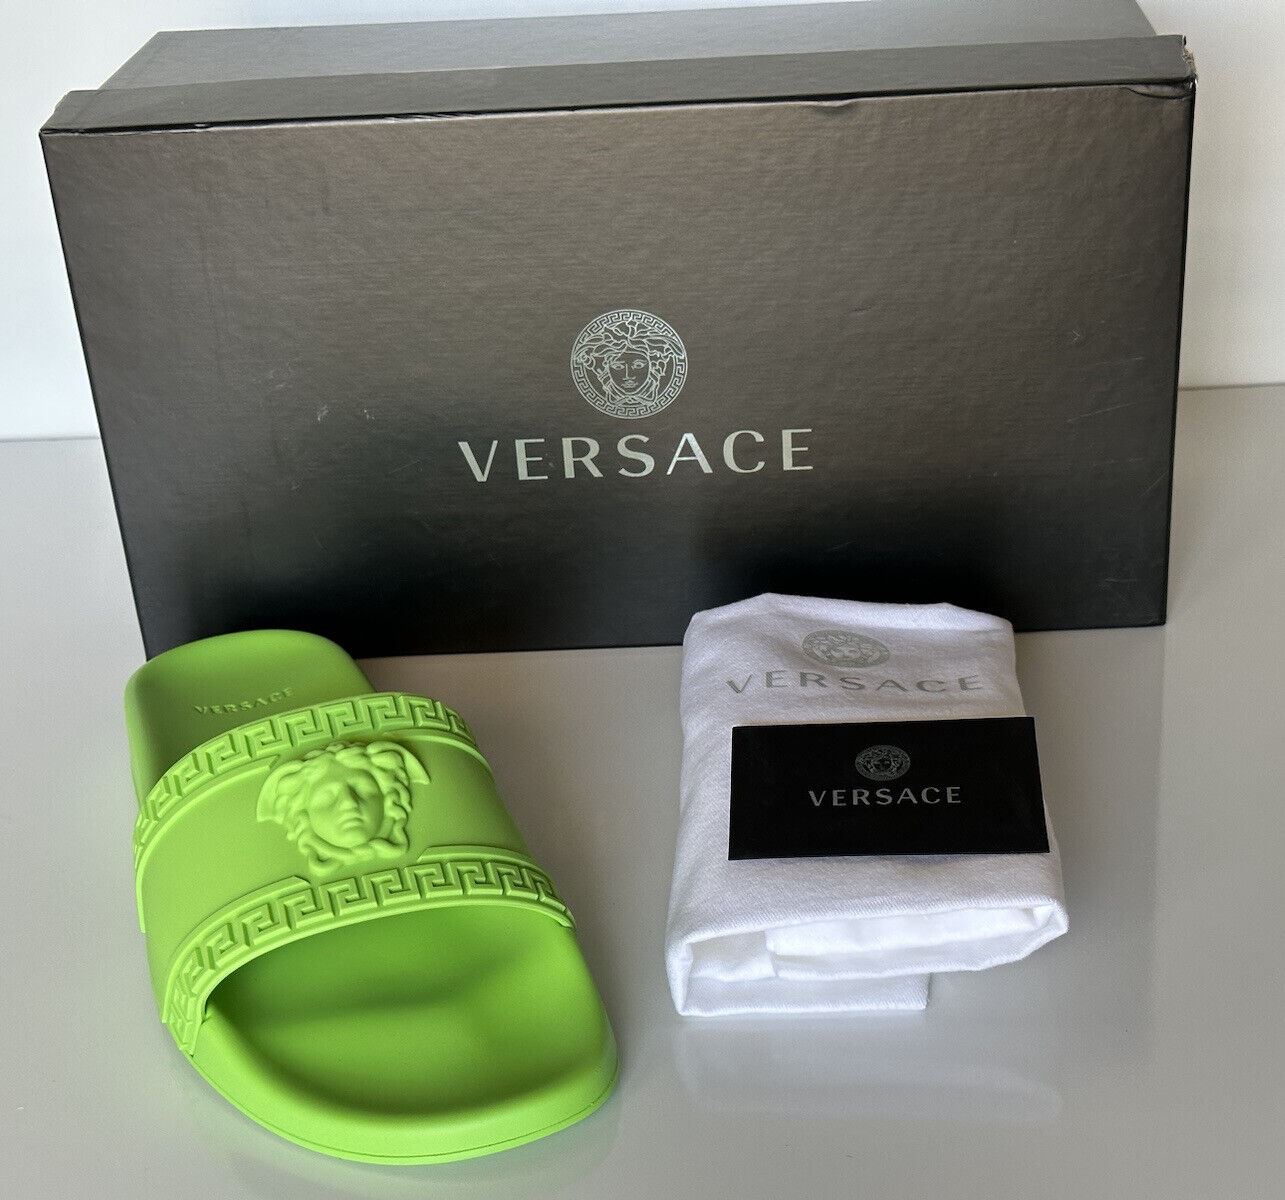 NIB Versace Medusa Head Slides Sandals Neon Green 13 US (46 Euro) DSU5883 Italy